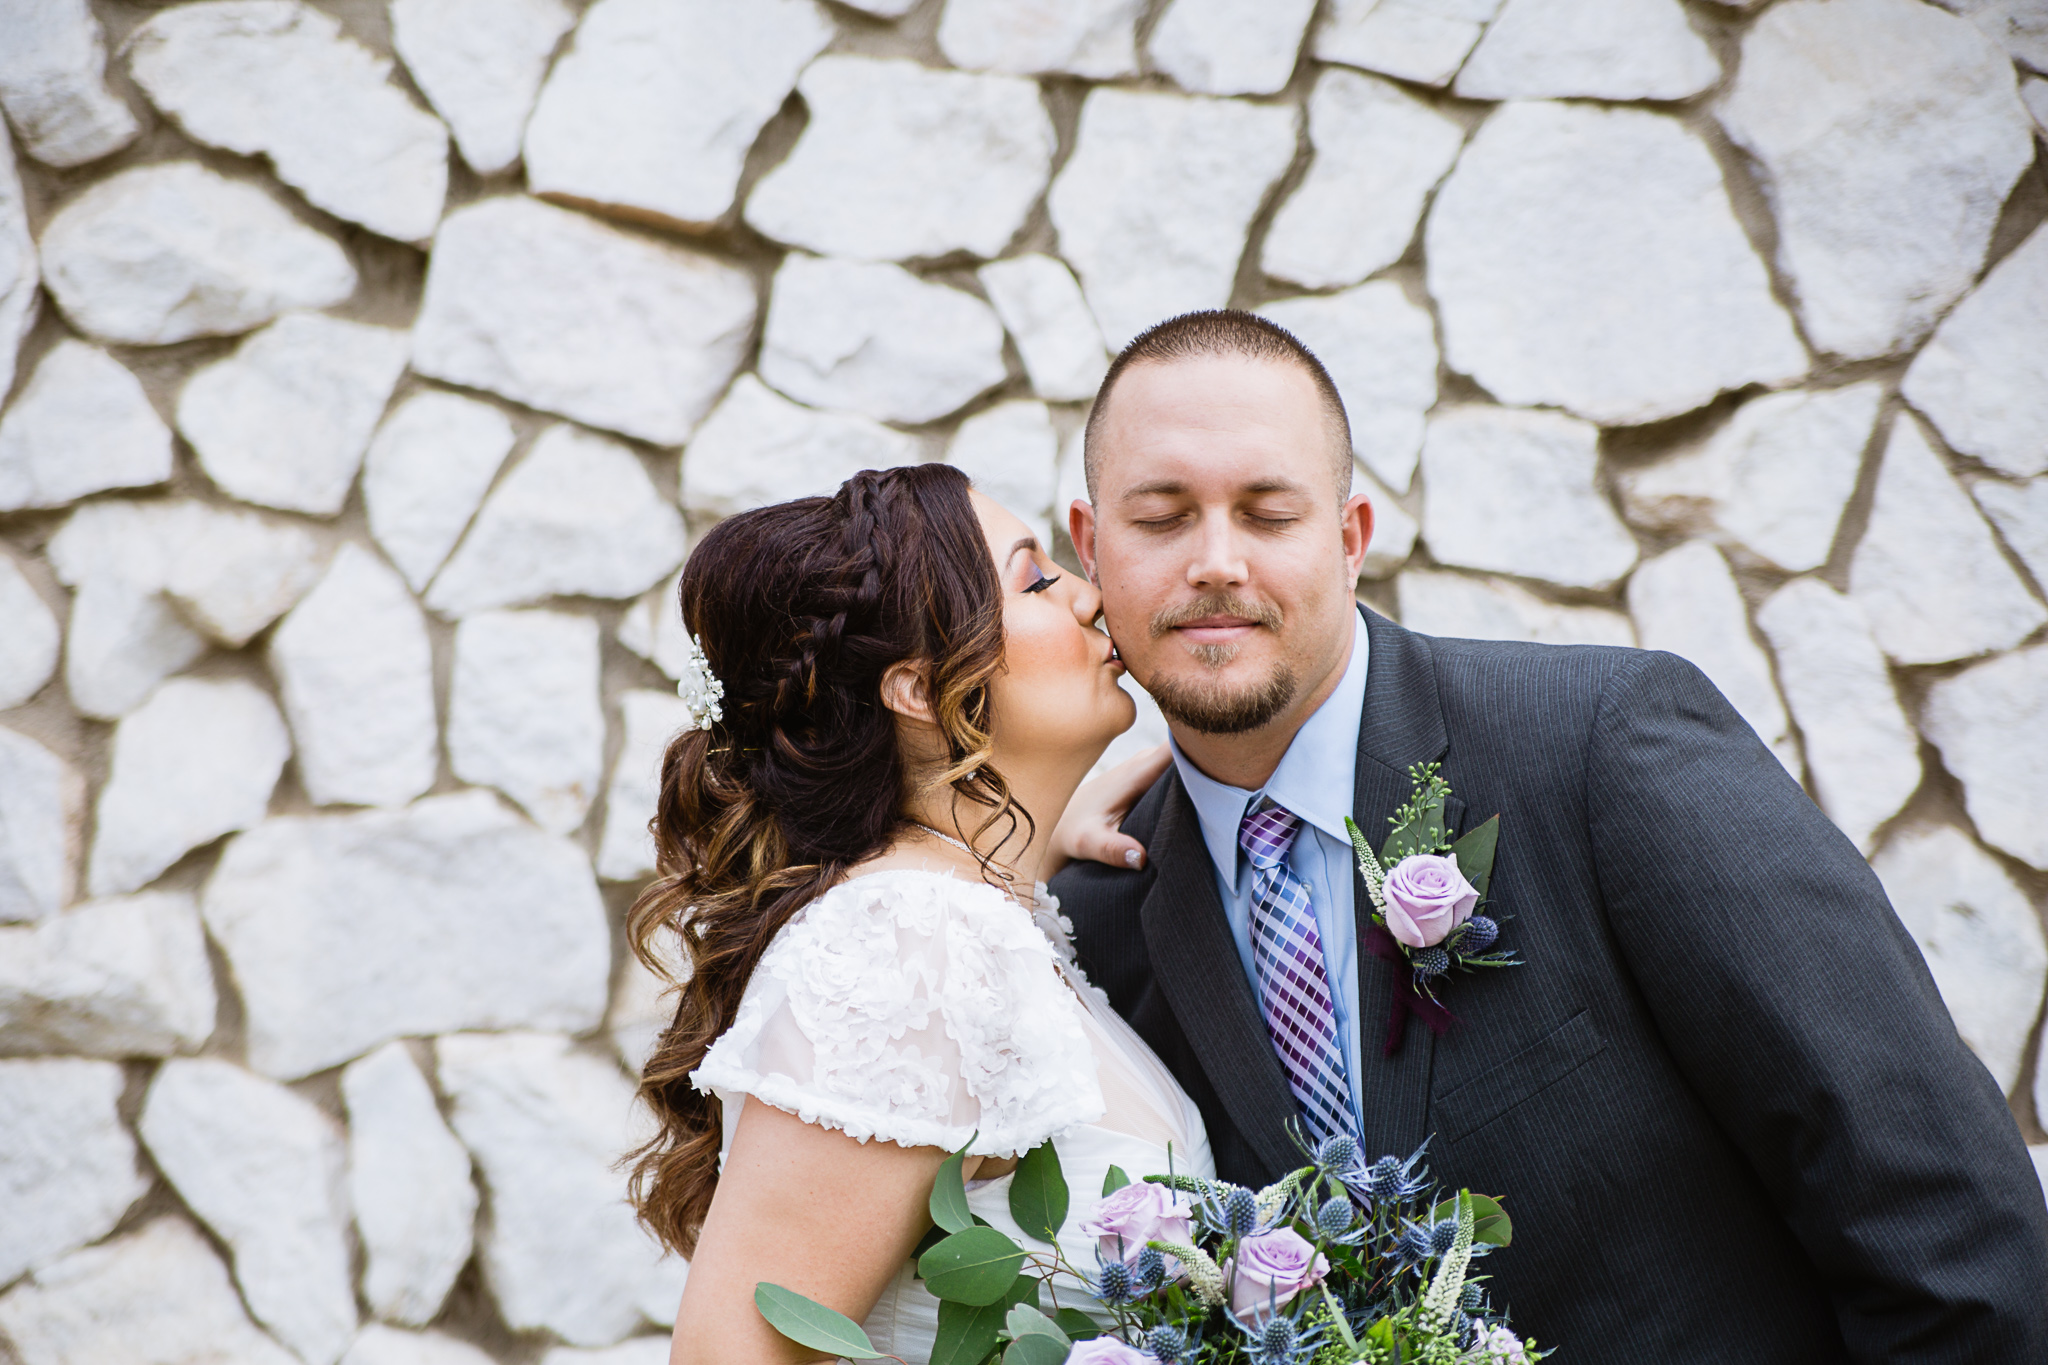 Bride kisses groom's cheek on their wedding day by Arizona wedding photographer PMA Photography.